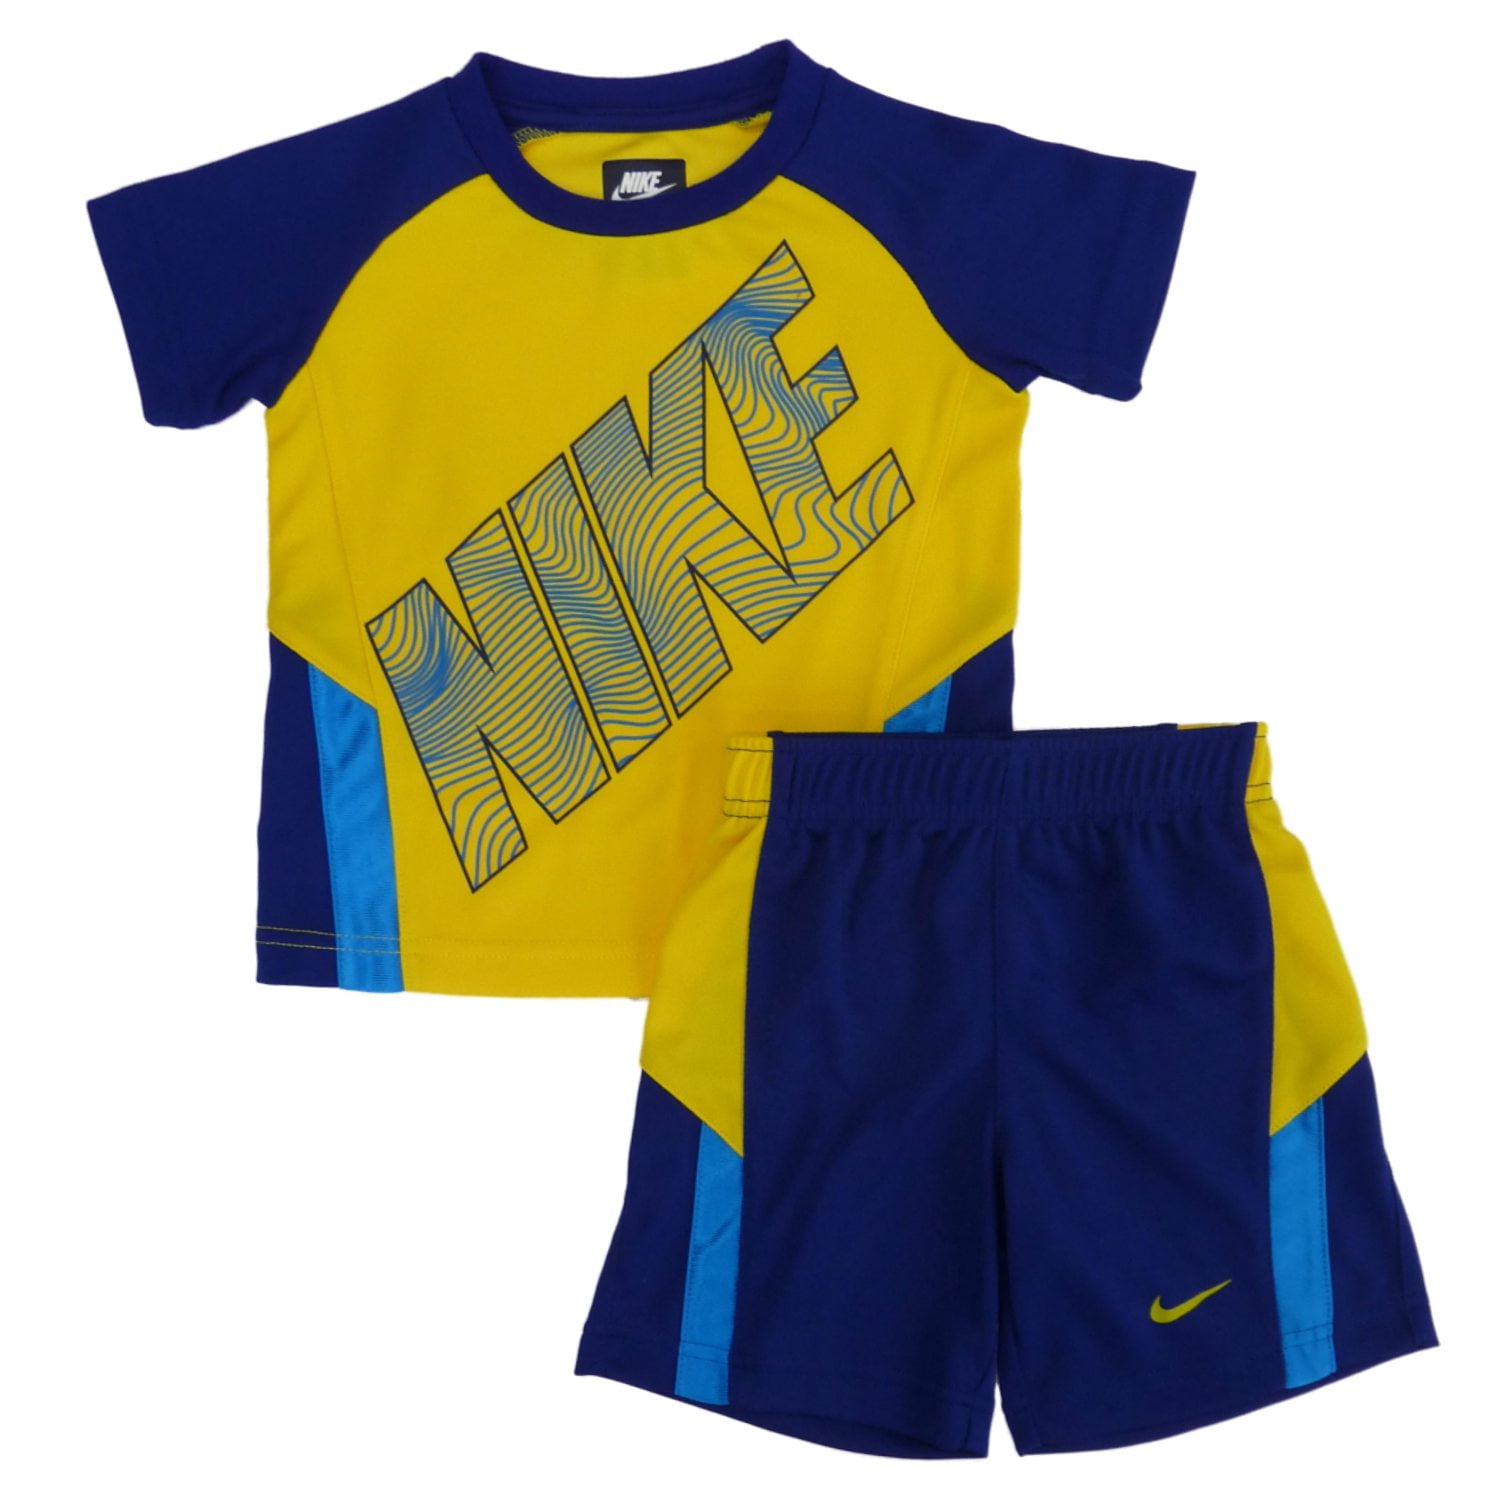 Nike - Nike Toddler Boys 2-Piece Yellow & Blue Athletic T-Shirt ...